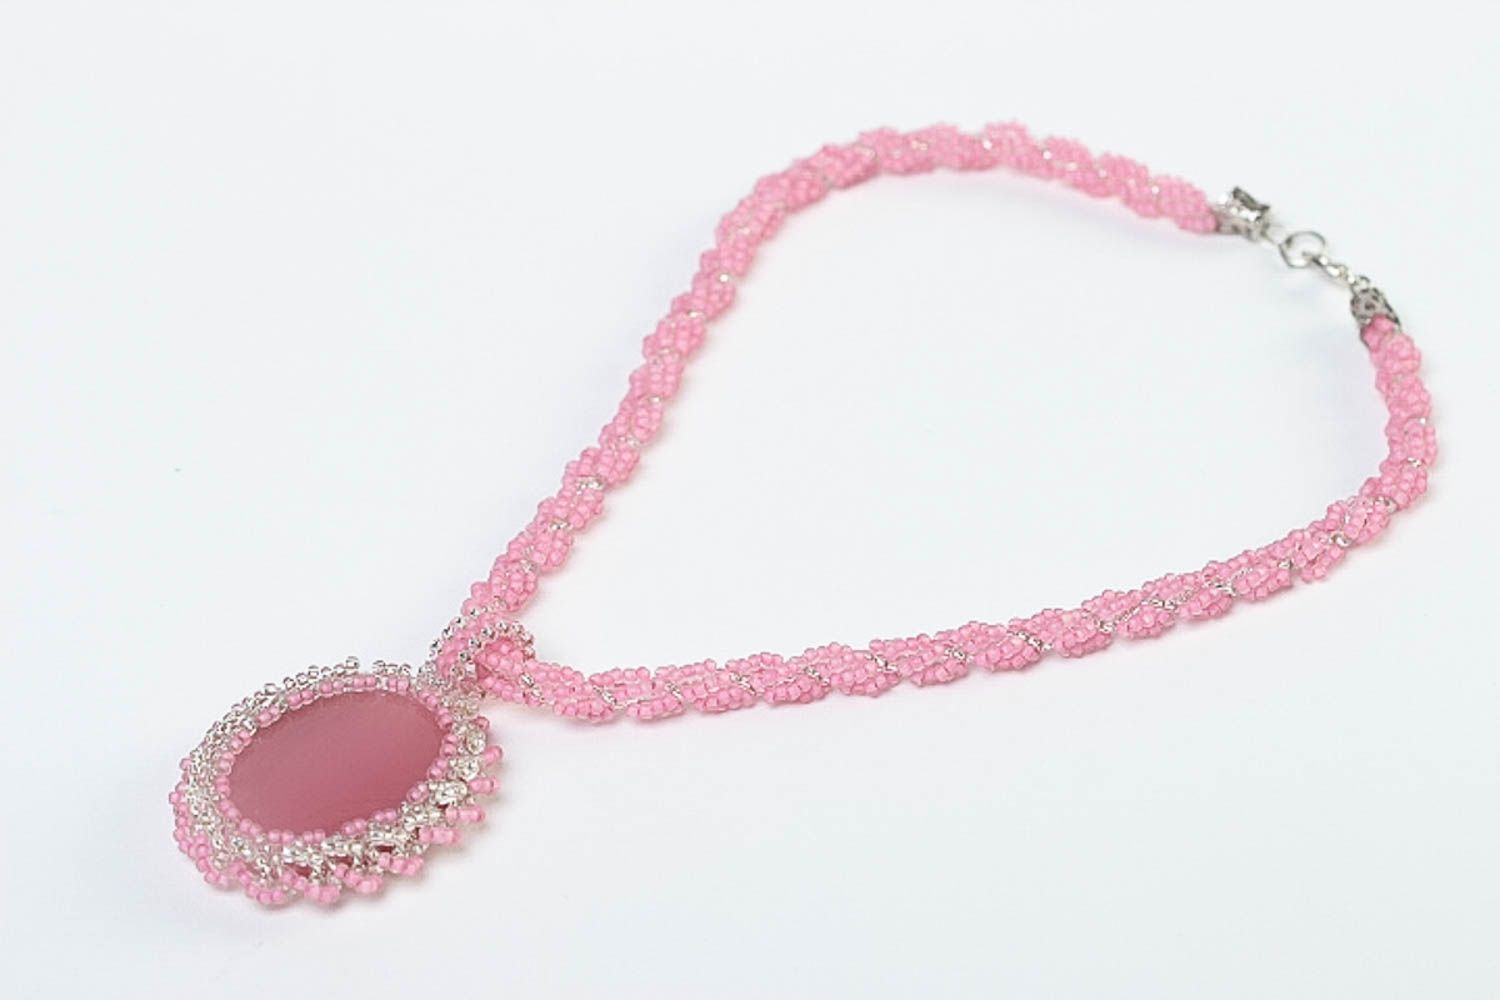 Stylish handmade beaded necklace gemstone pendant necklace jewelry designs photo 2